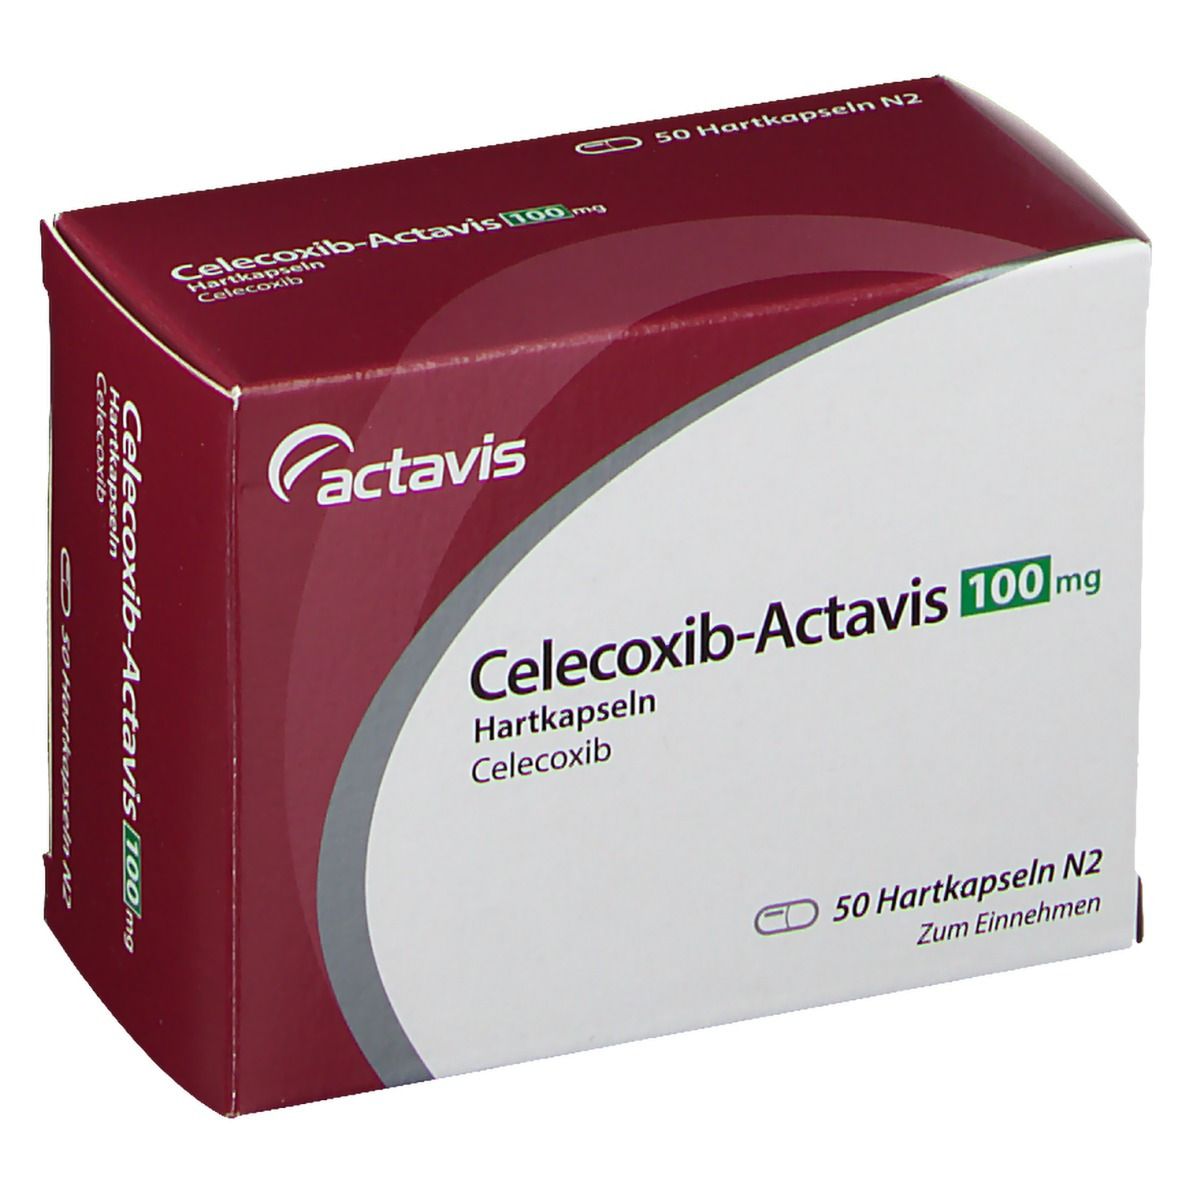 CELECOXIB Actavis 100 mg Hartkapseln